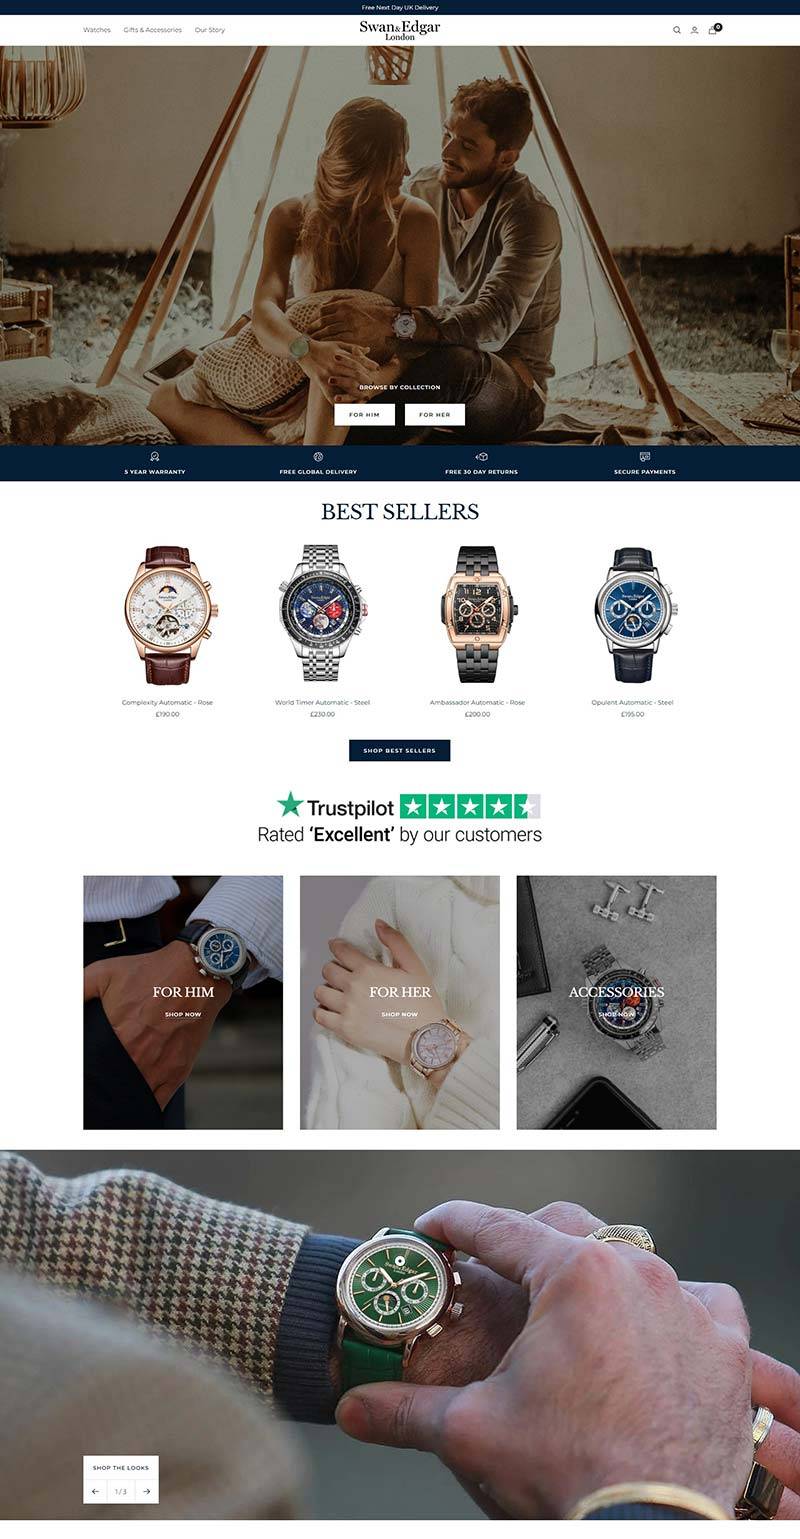 Swan & Edgar 英国时尚腕表品牌购物网站